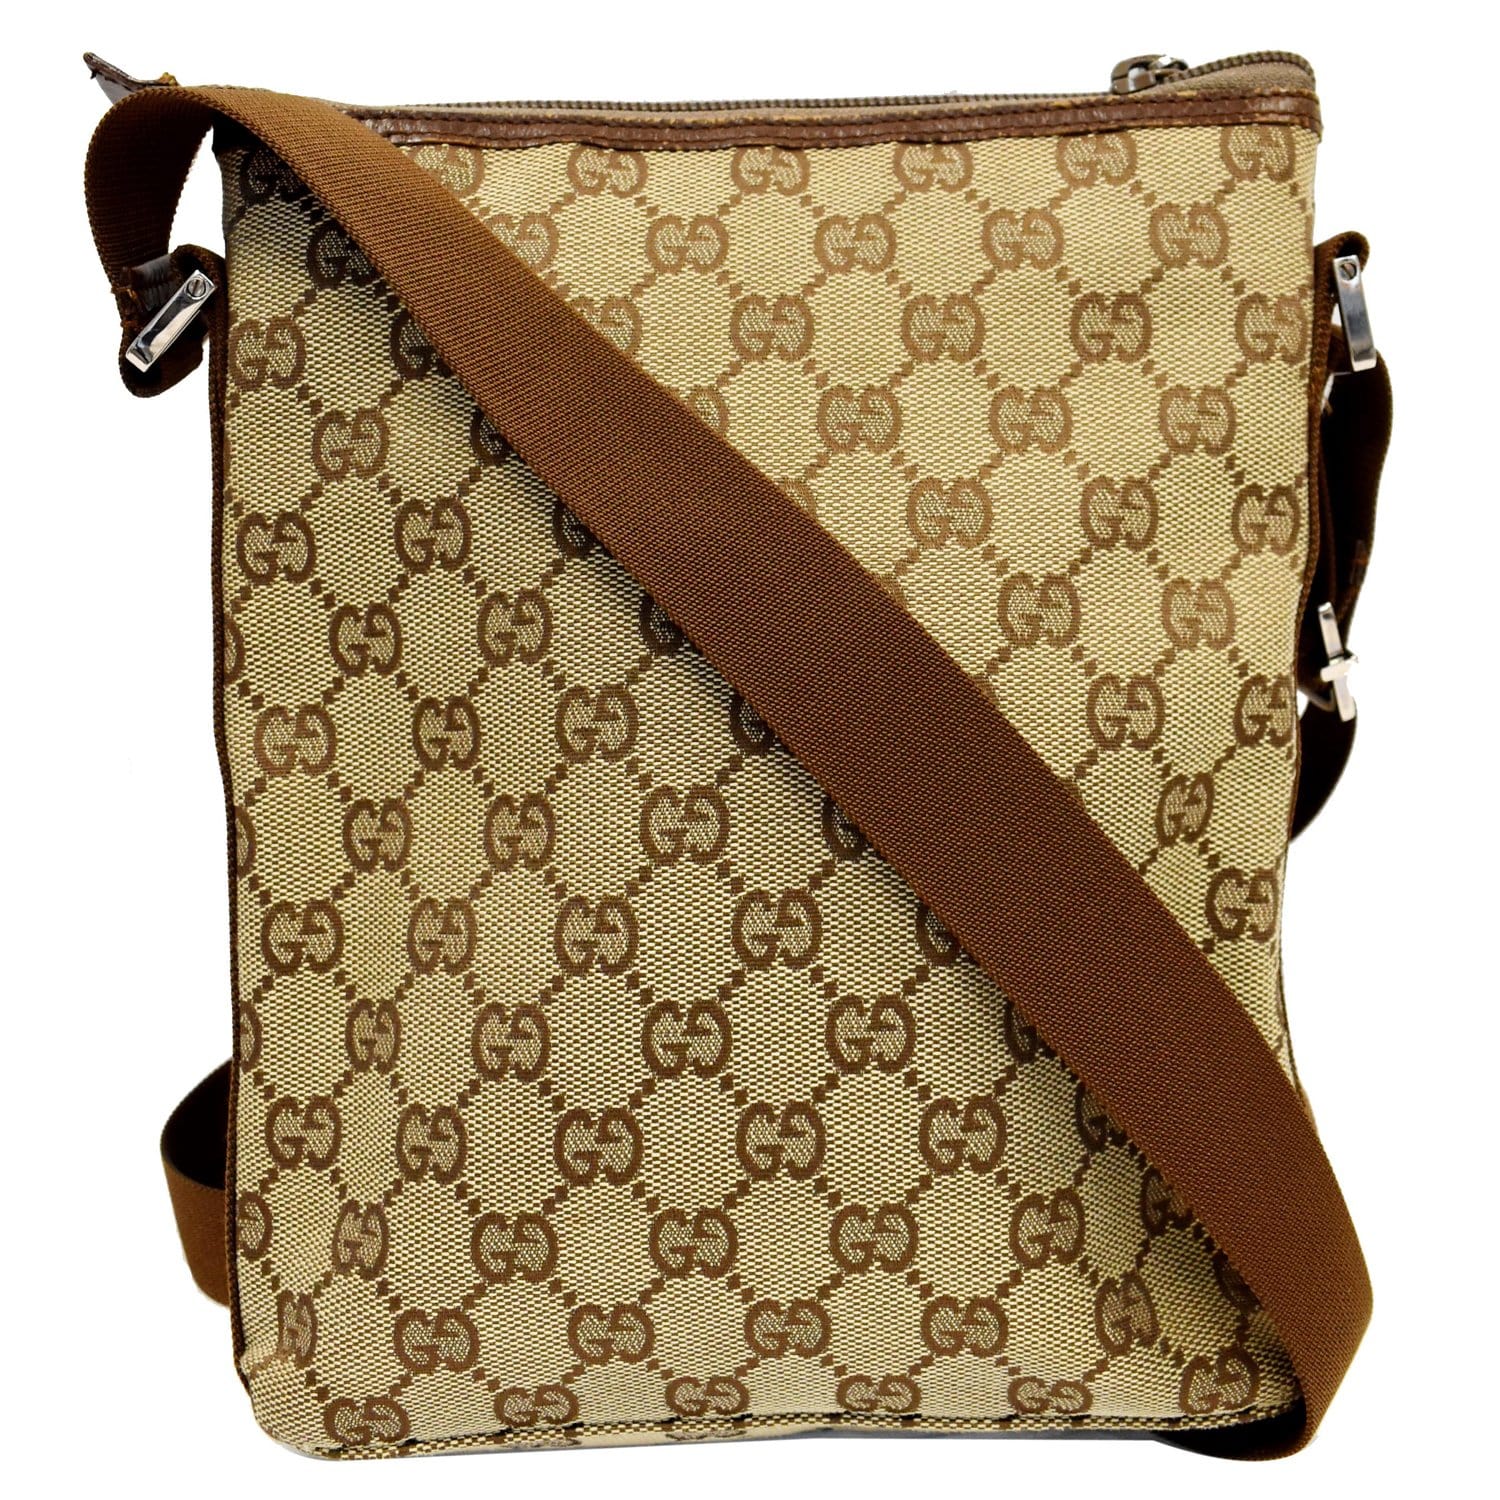 Gucci Monogram Canvas Small Messenger Bag Brown/Beige